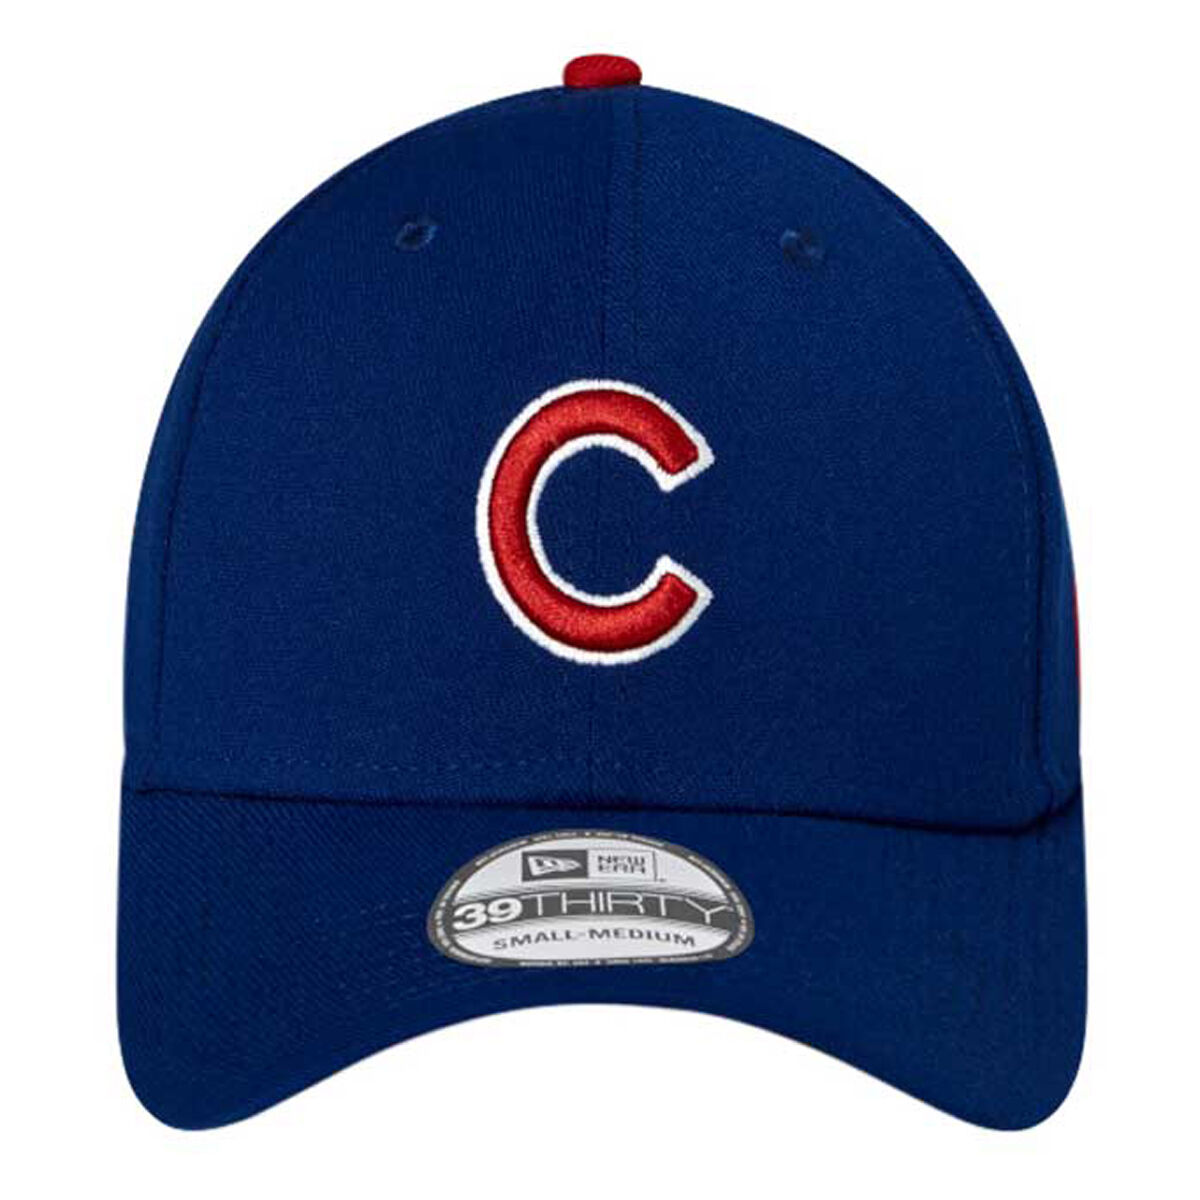 Chicago Cubs New Era Royal/Red Diamond Era 39Thirty Flex Fit Game Hat NWT 